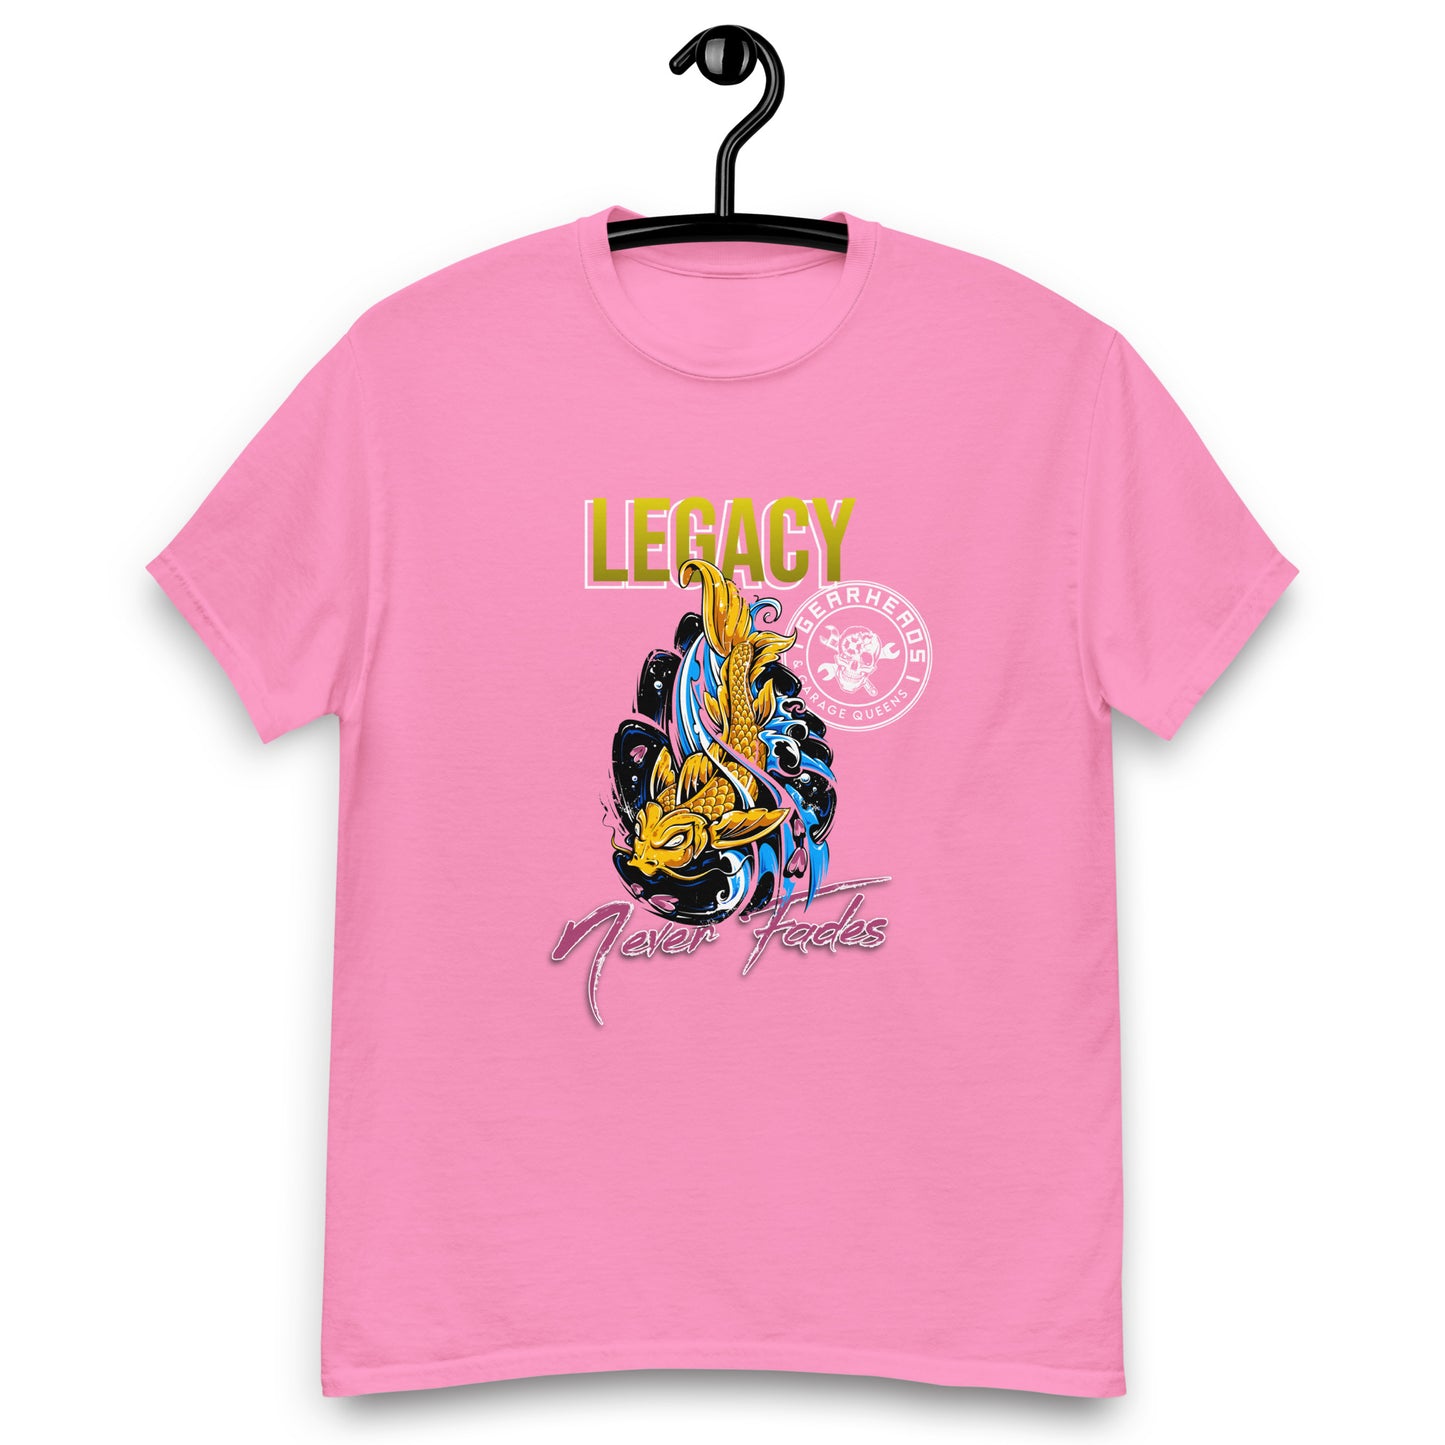 Legacy Never Fades V4.0 - Men's classic tee